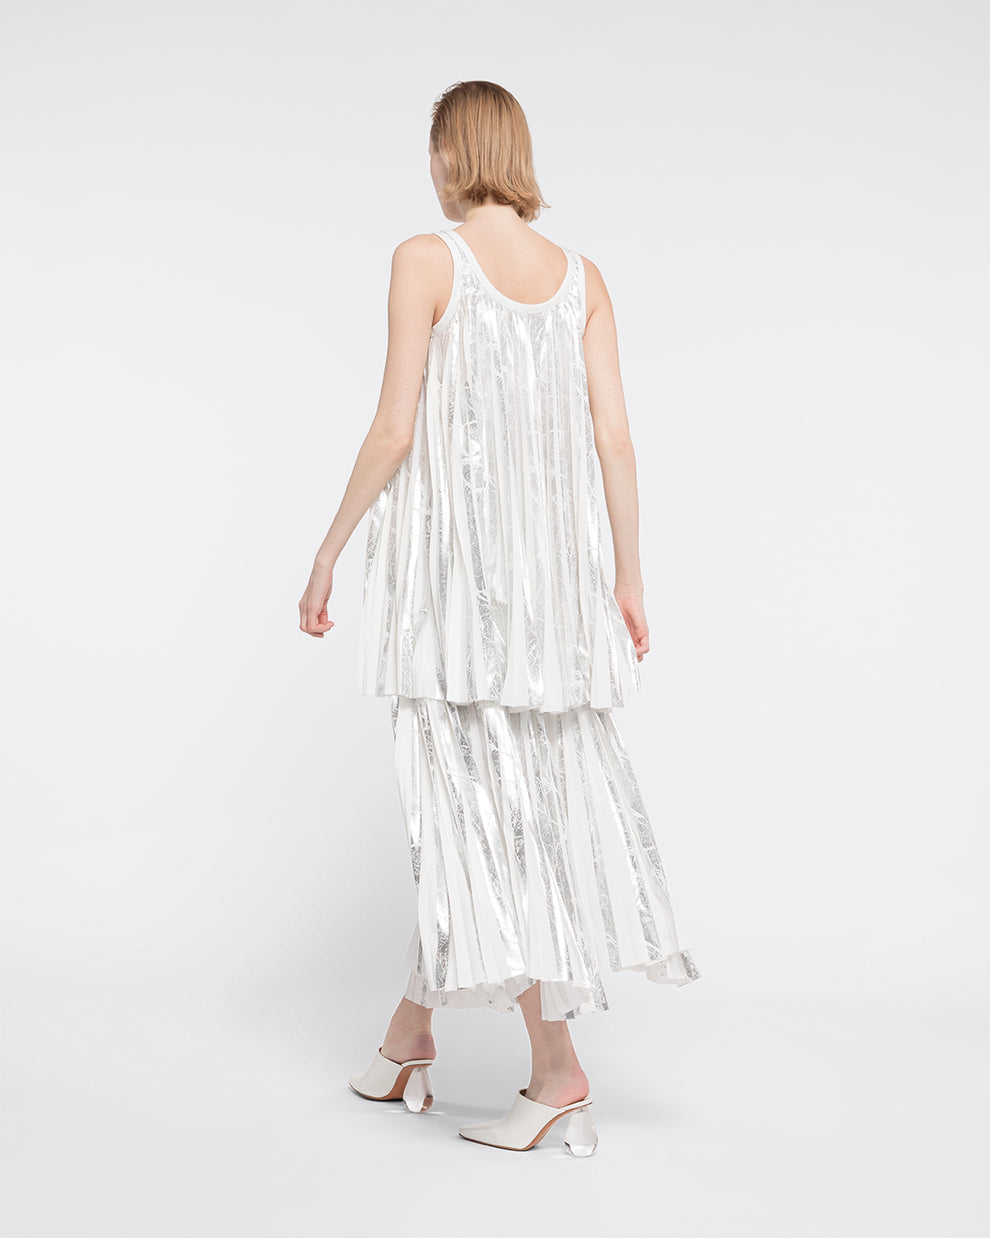 JOSEPHINE DRESS - WHITE / SILVER - AZ Factory